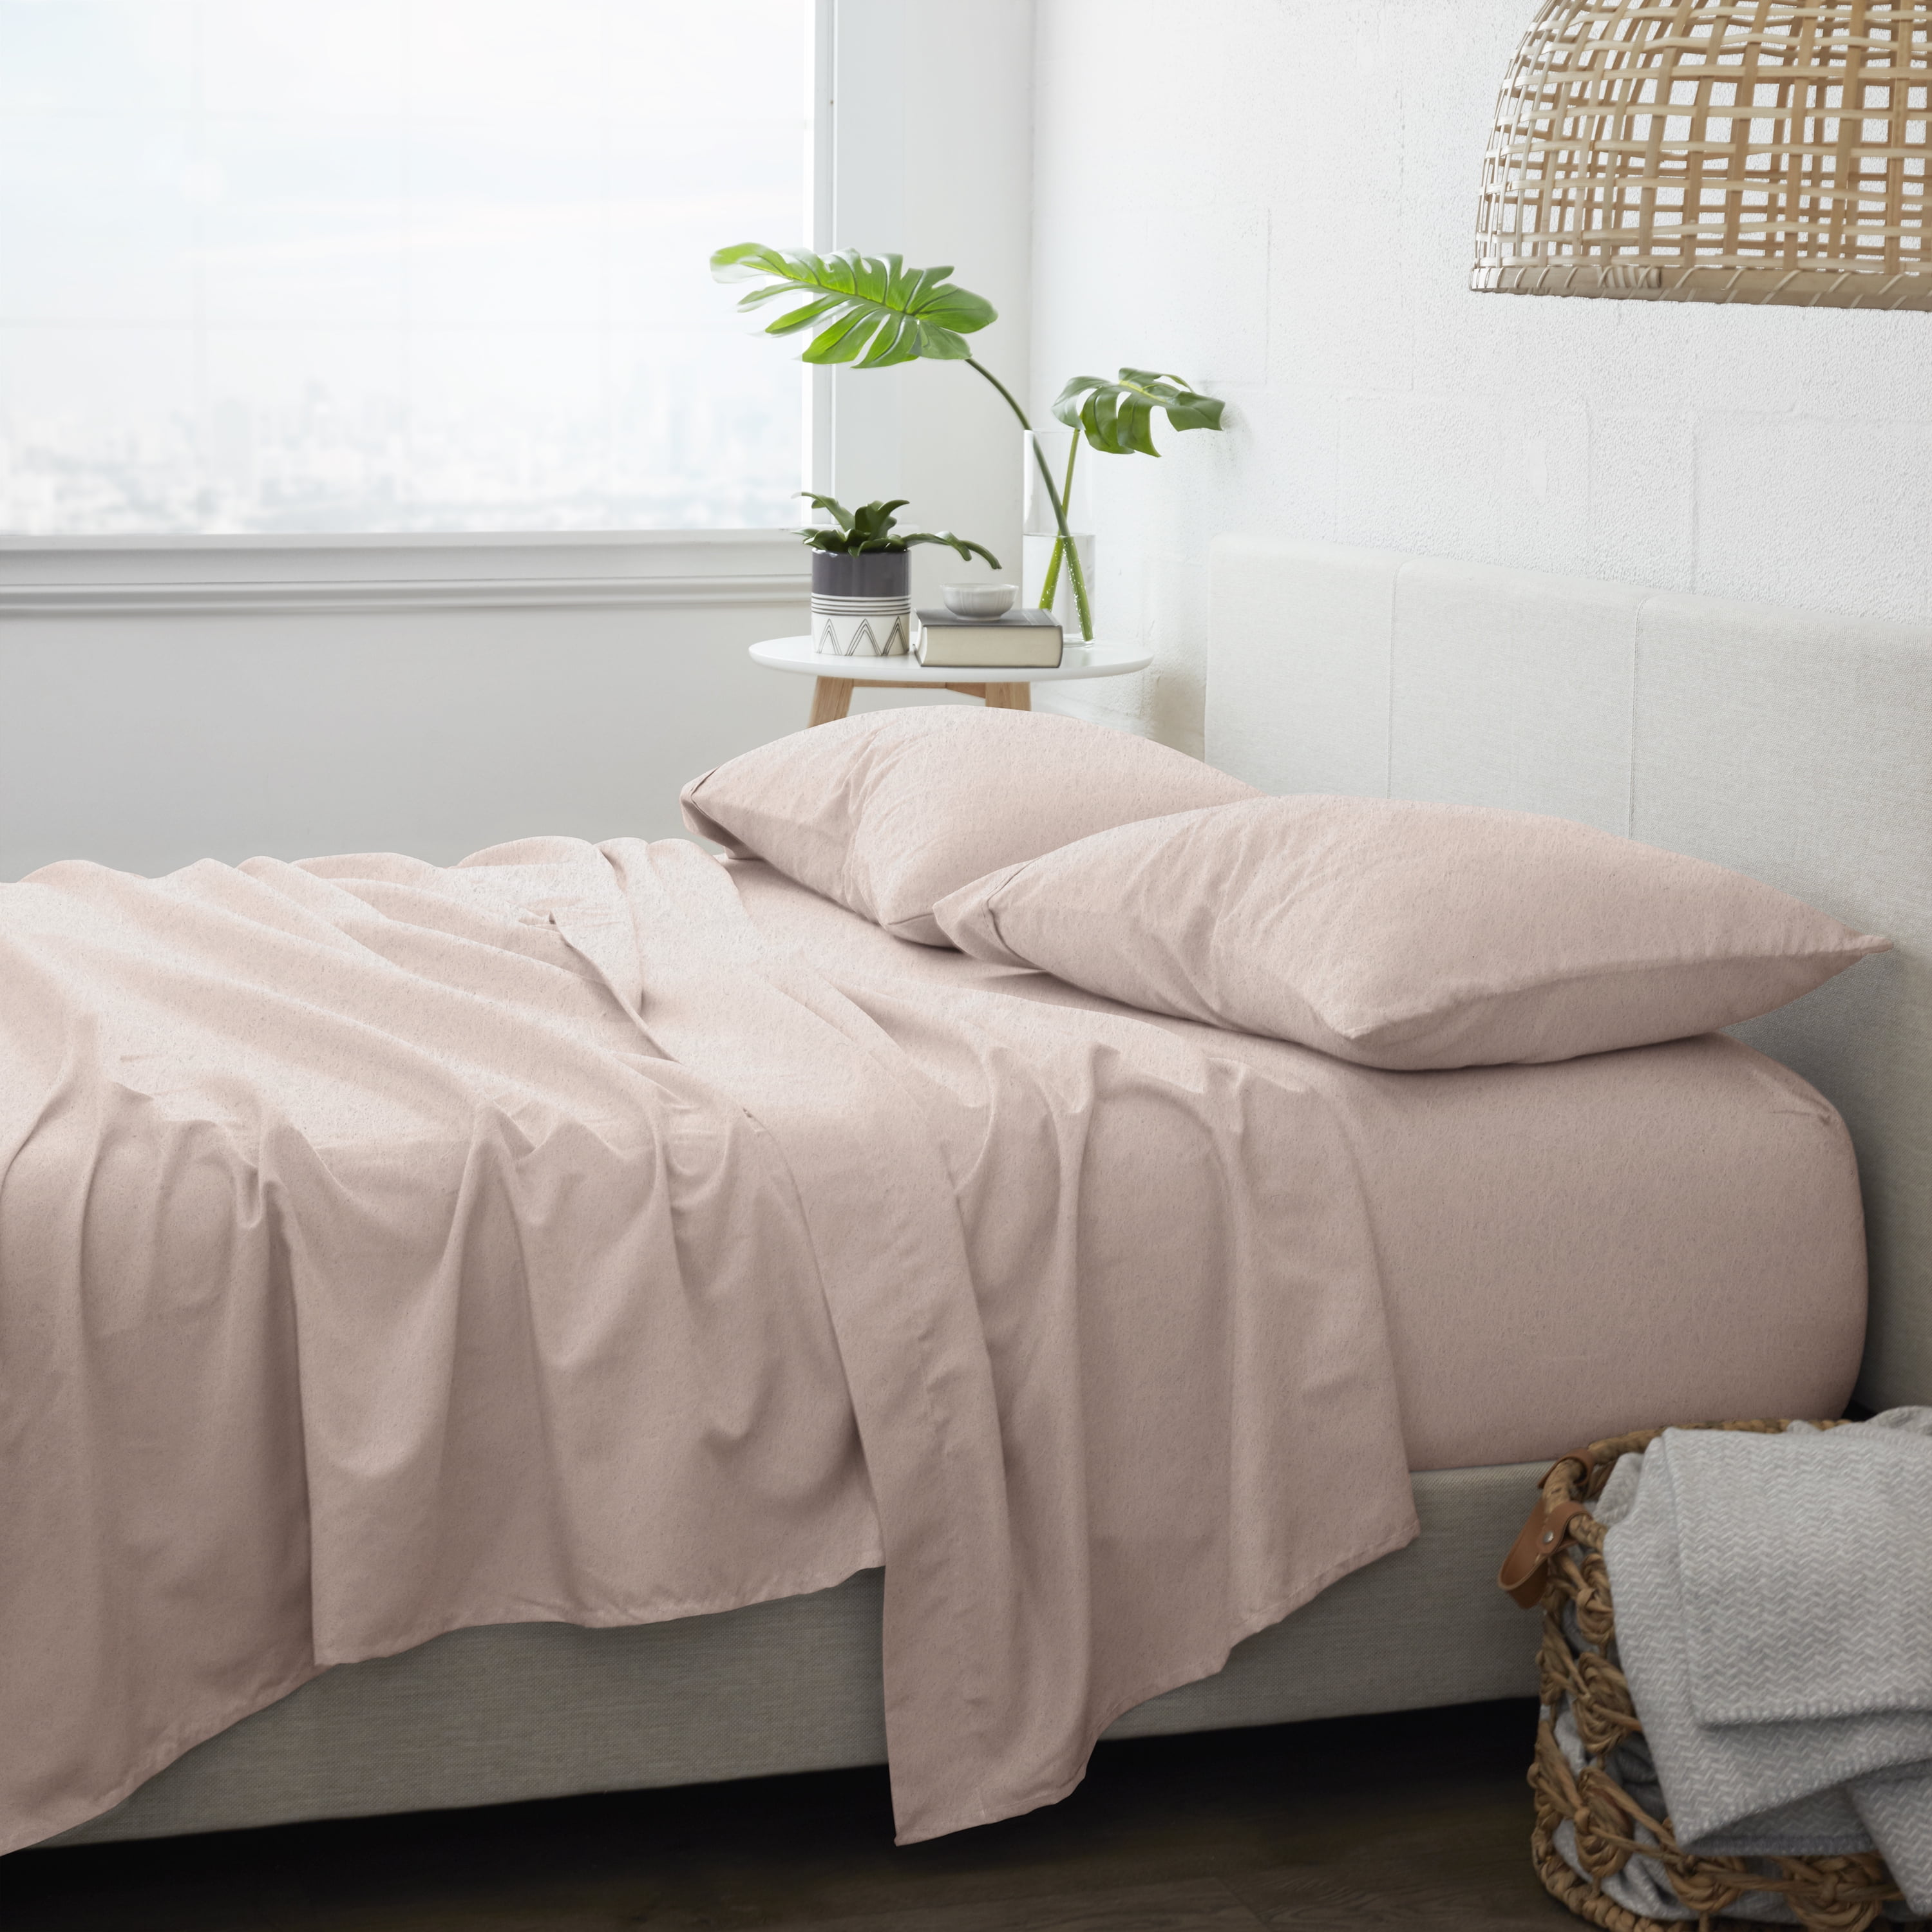 Super Soft Flannel 100% Cotton 4-Piece Bed Sheet Sets 6 COLORS 3 Sizes Available 